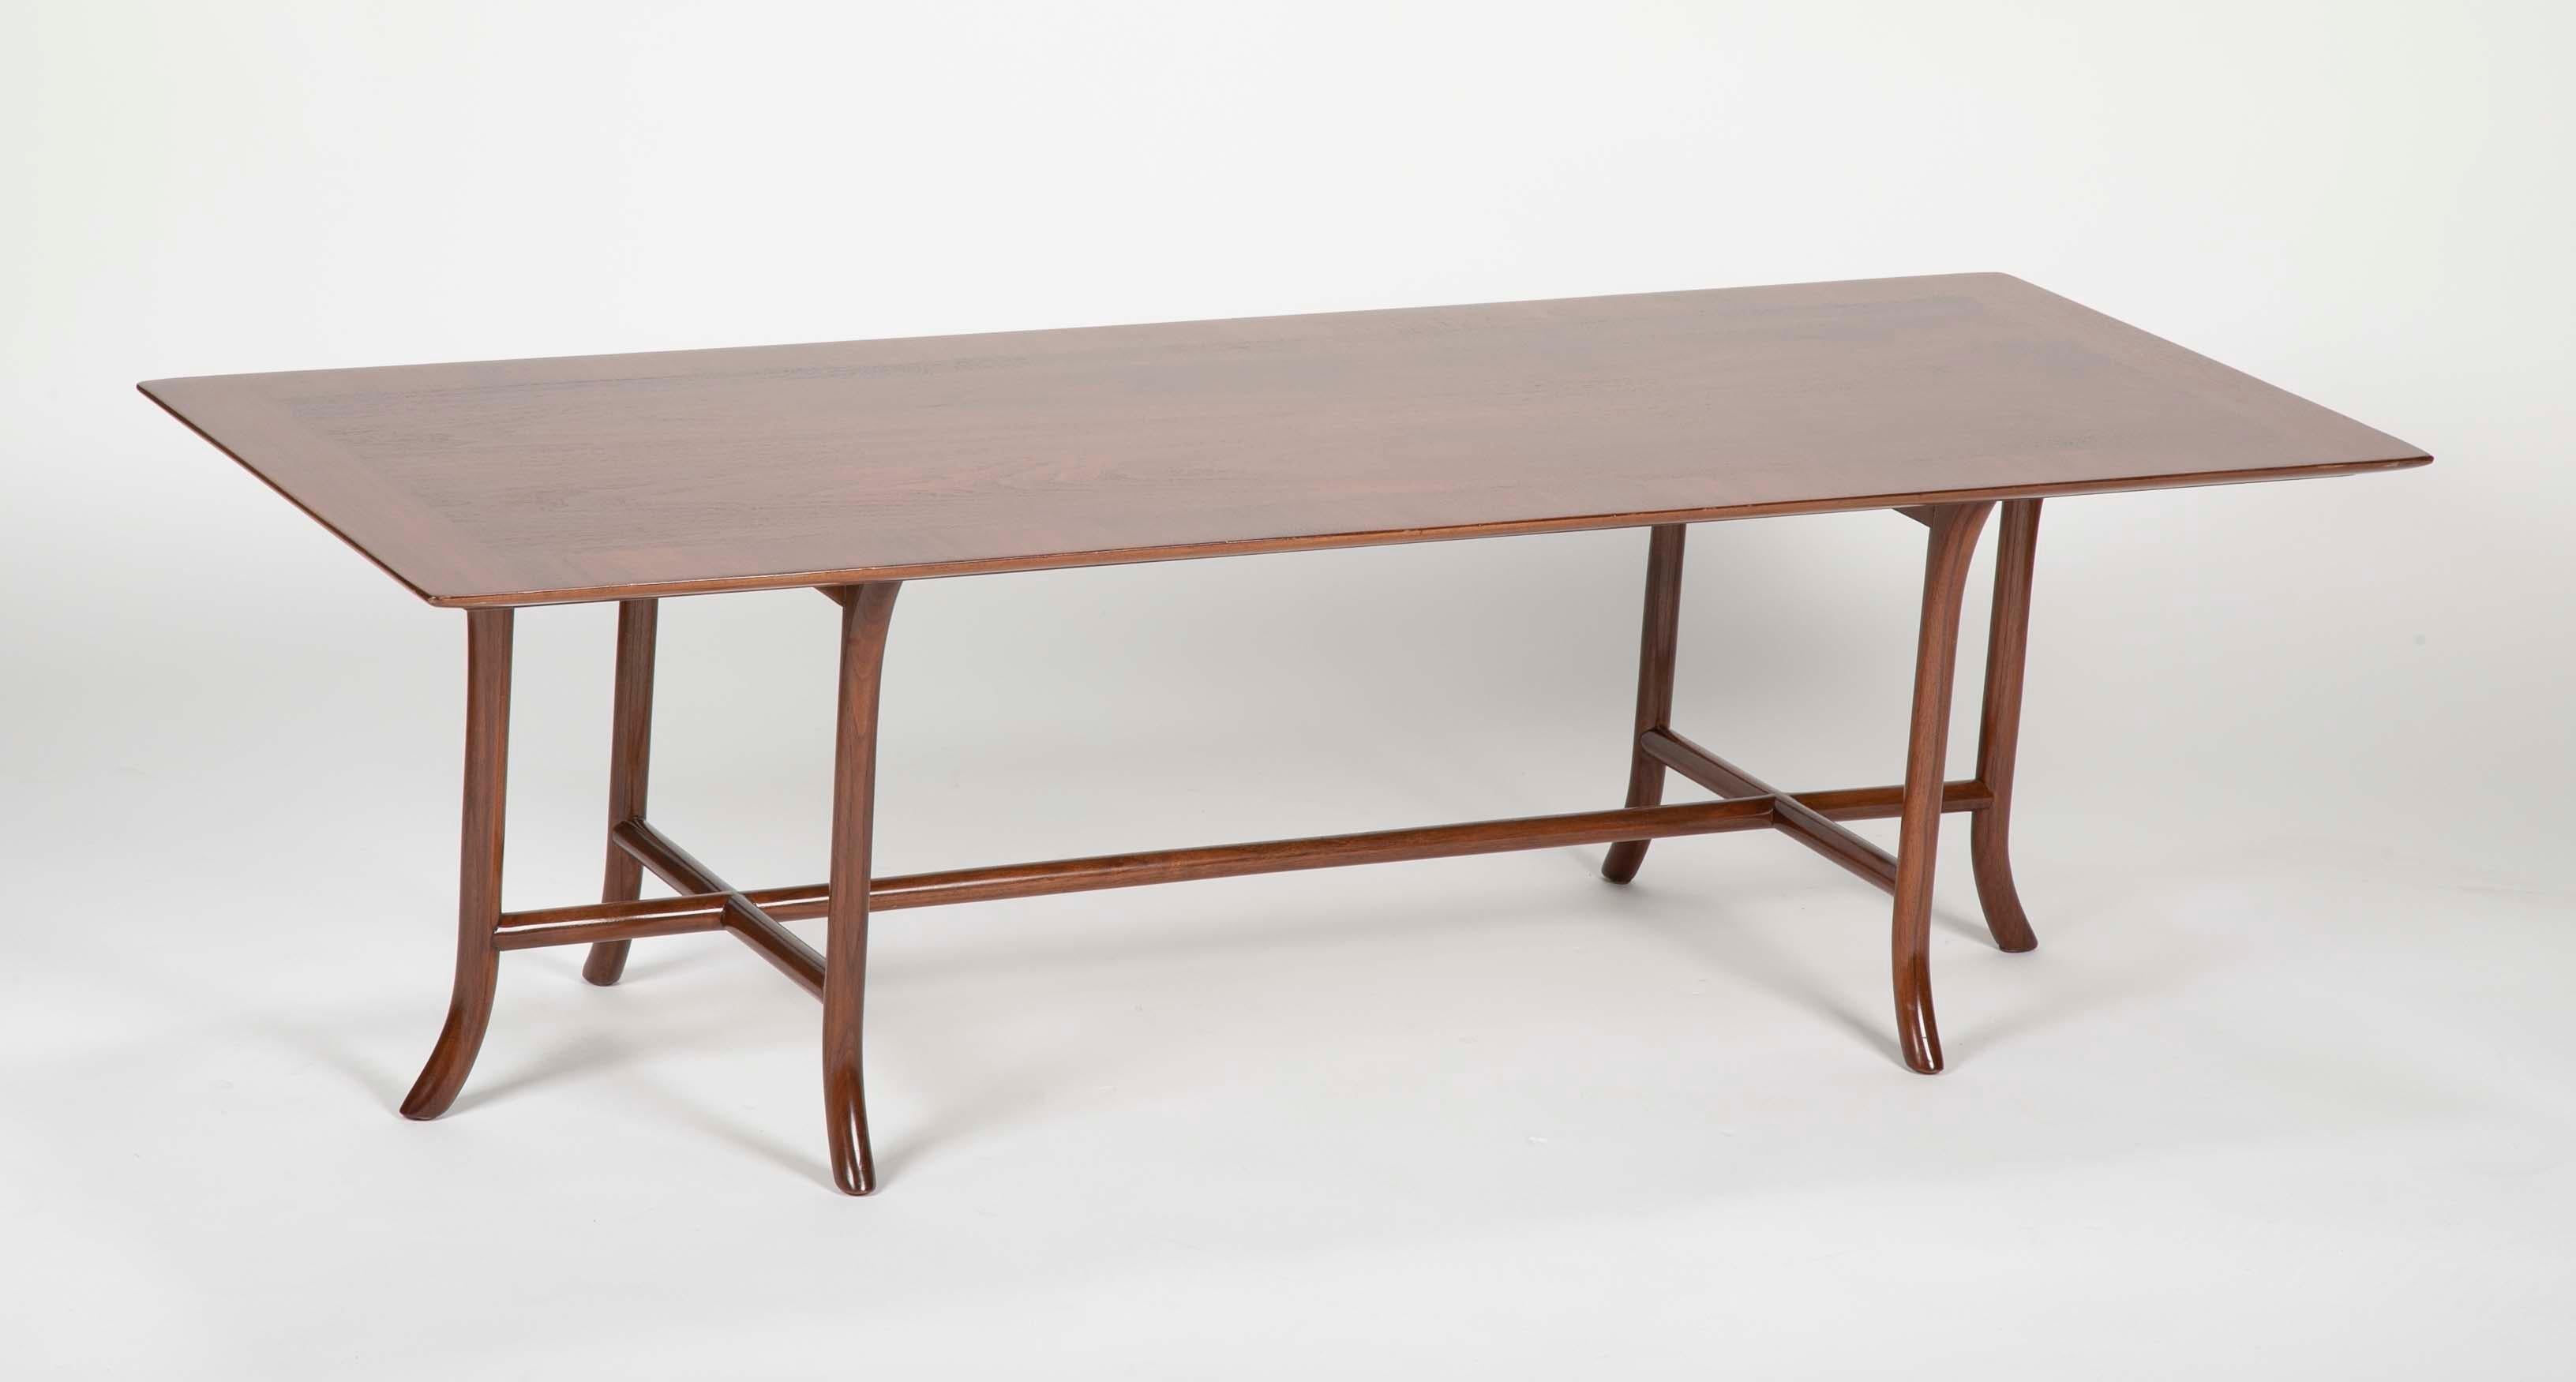 A walnut 6 saber legged coffee table by T.H. Robsjohn-Gibbings for Widdicomb.